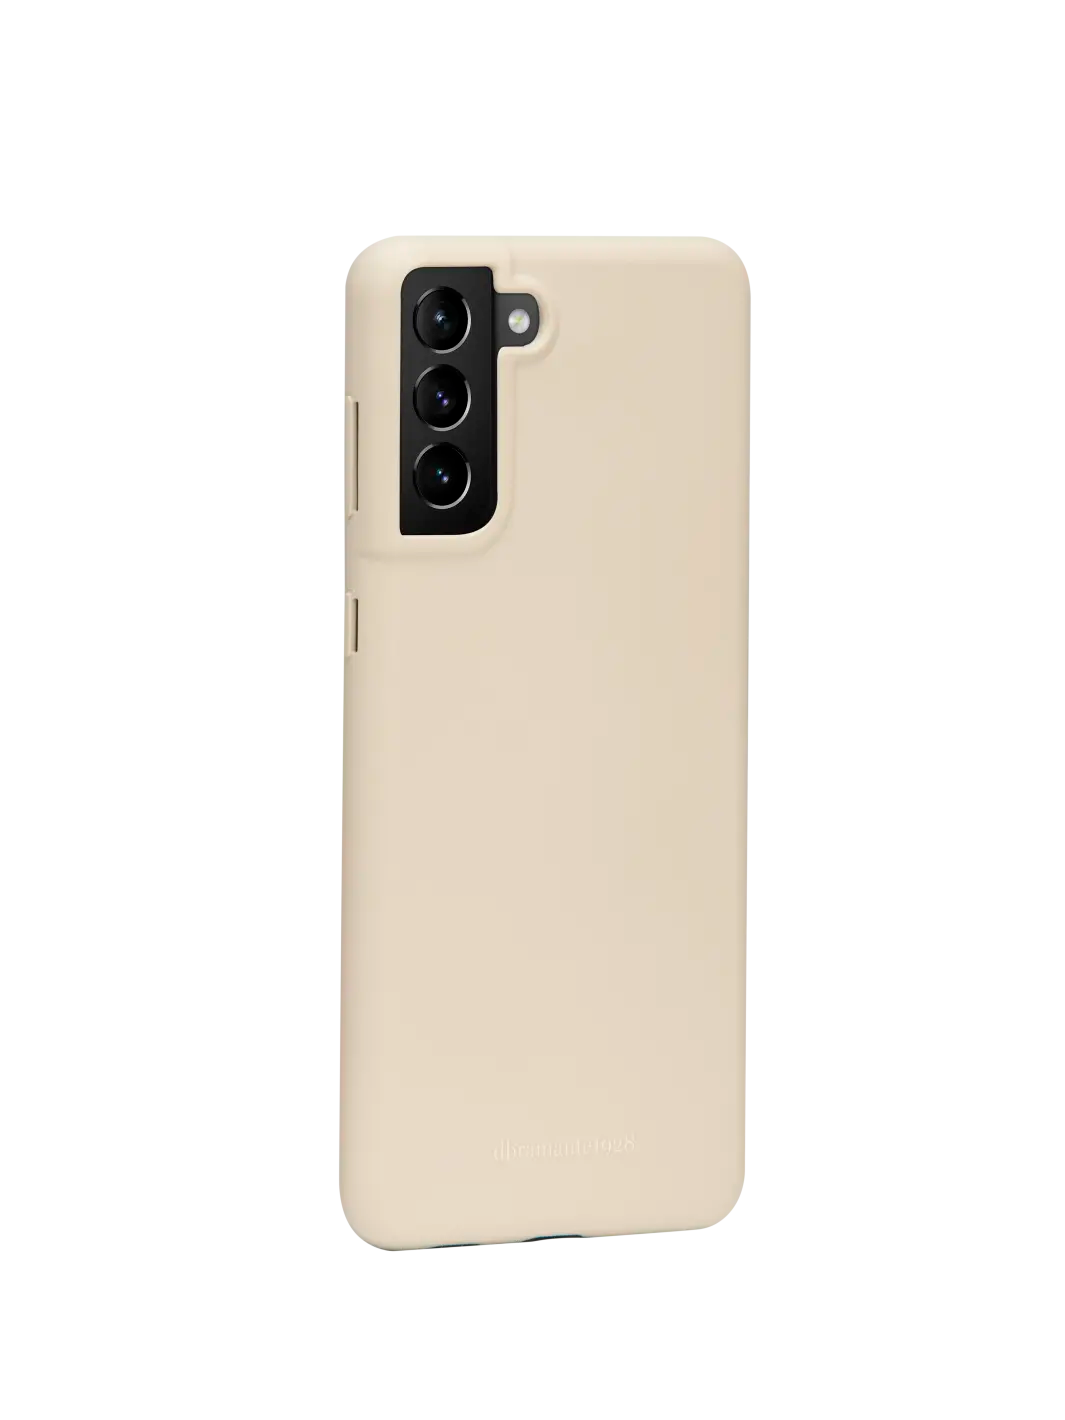 Bornholm Sahara Sand Galaxy S21+ Phone Cases